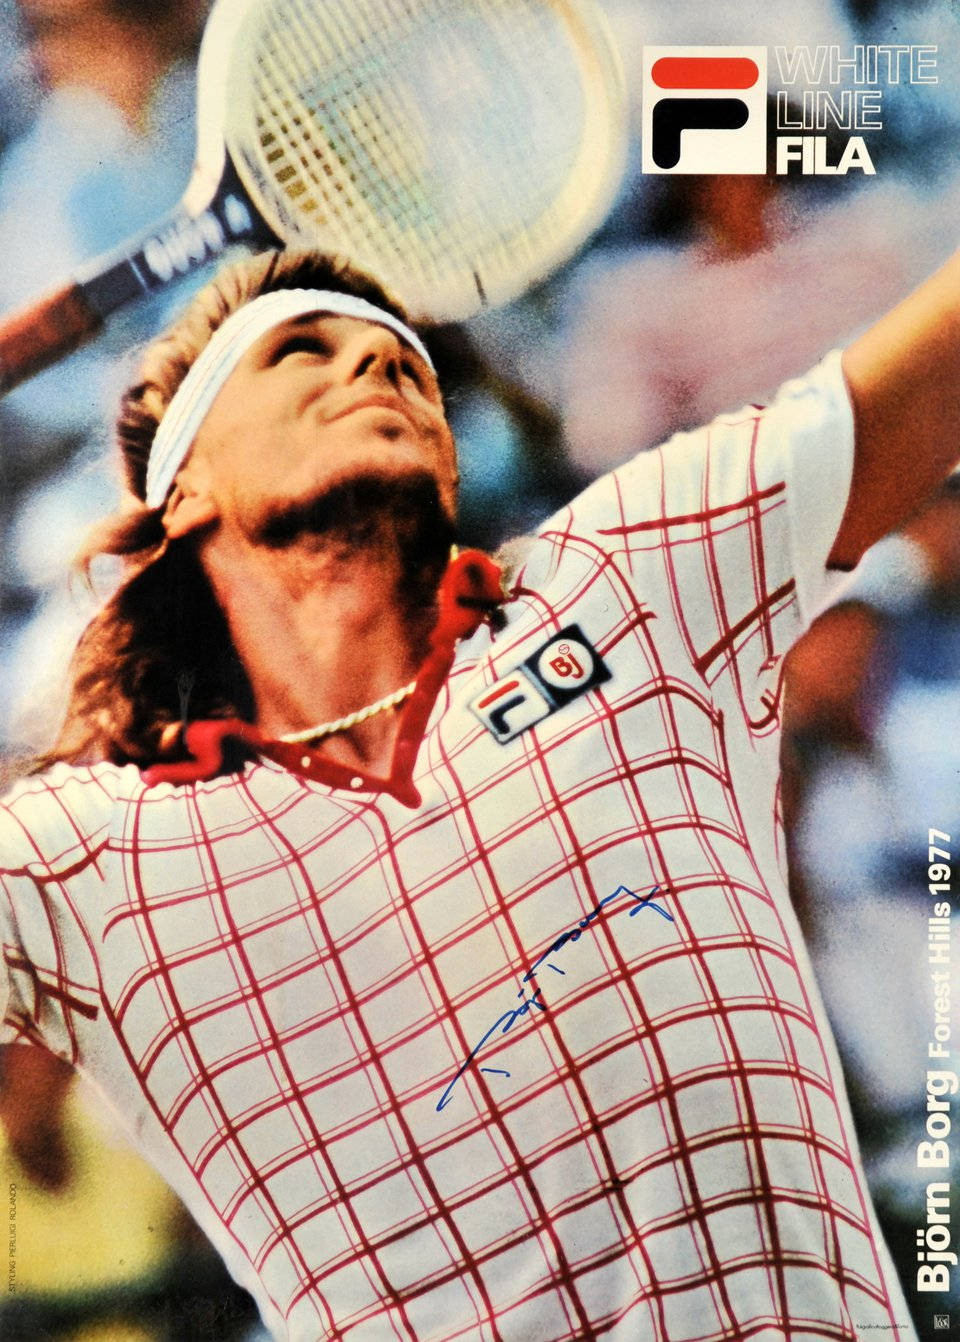 Swedish Tennis Player Björn Borg Fila Poster Wallpaper